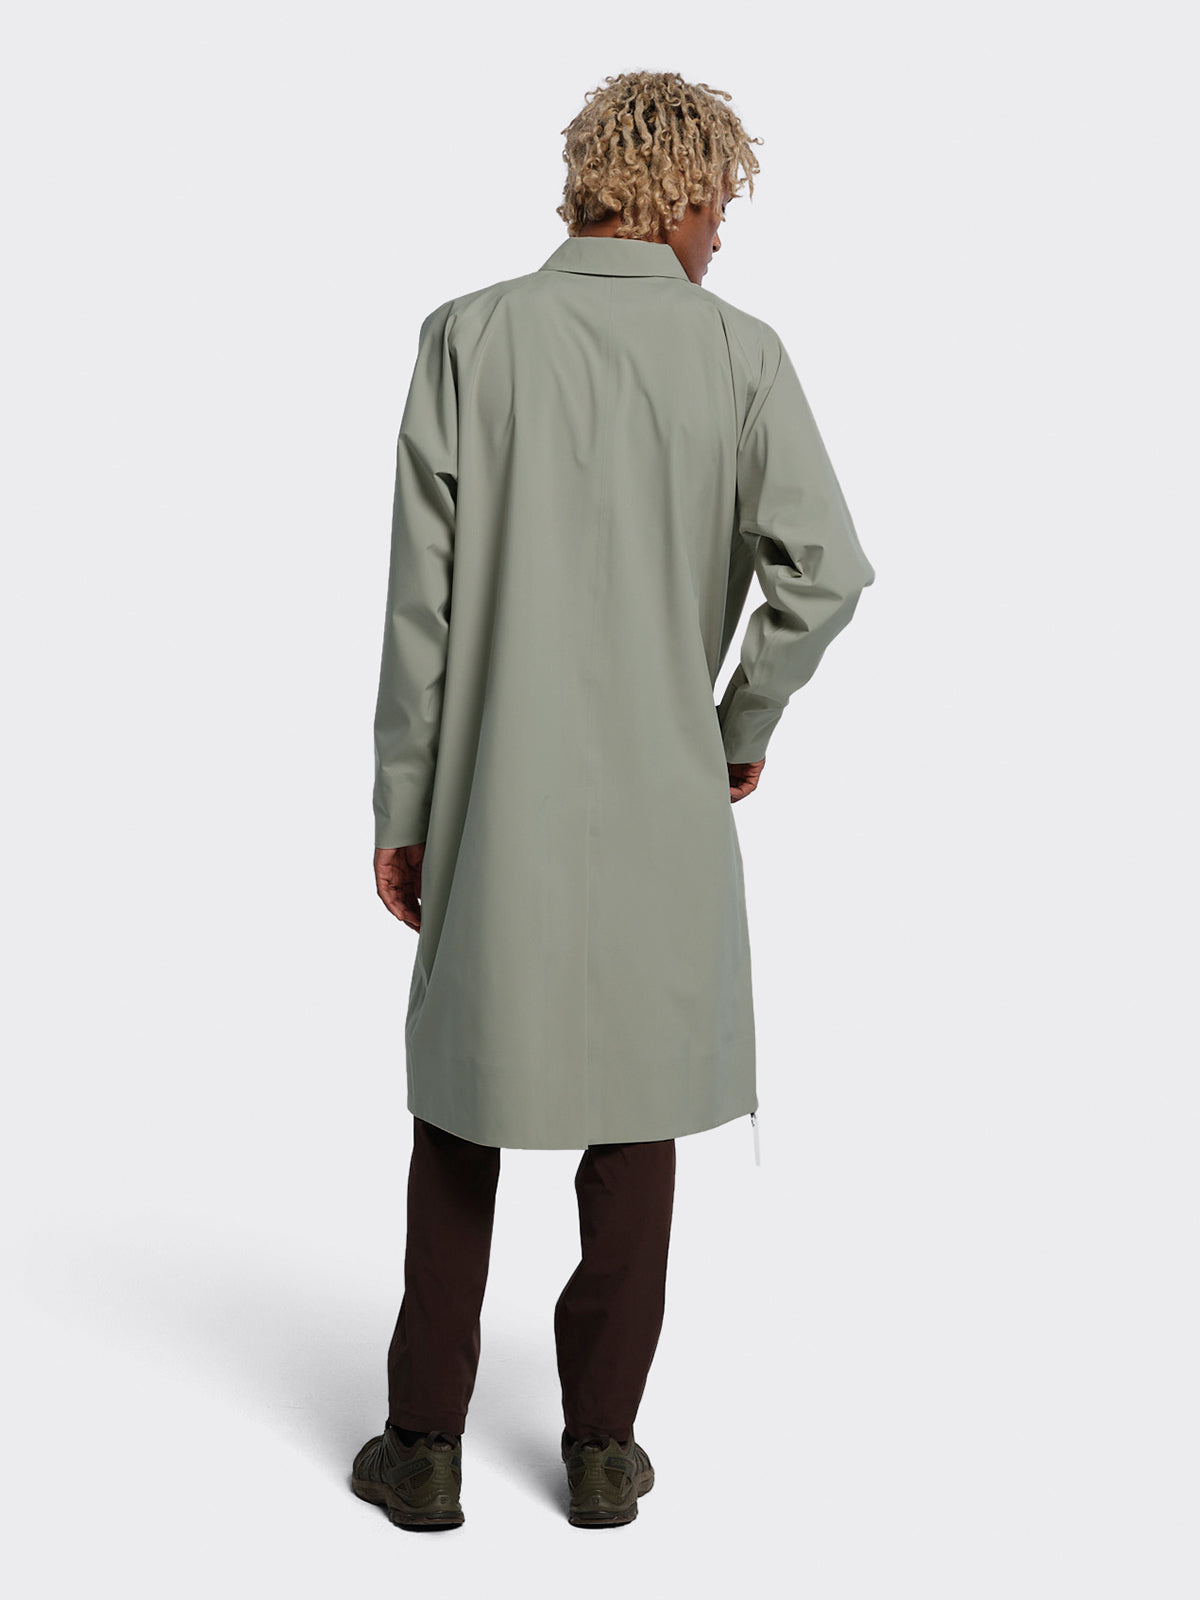 Model dressed in Stad coat by Blæst in the color Vetiver